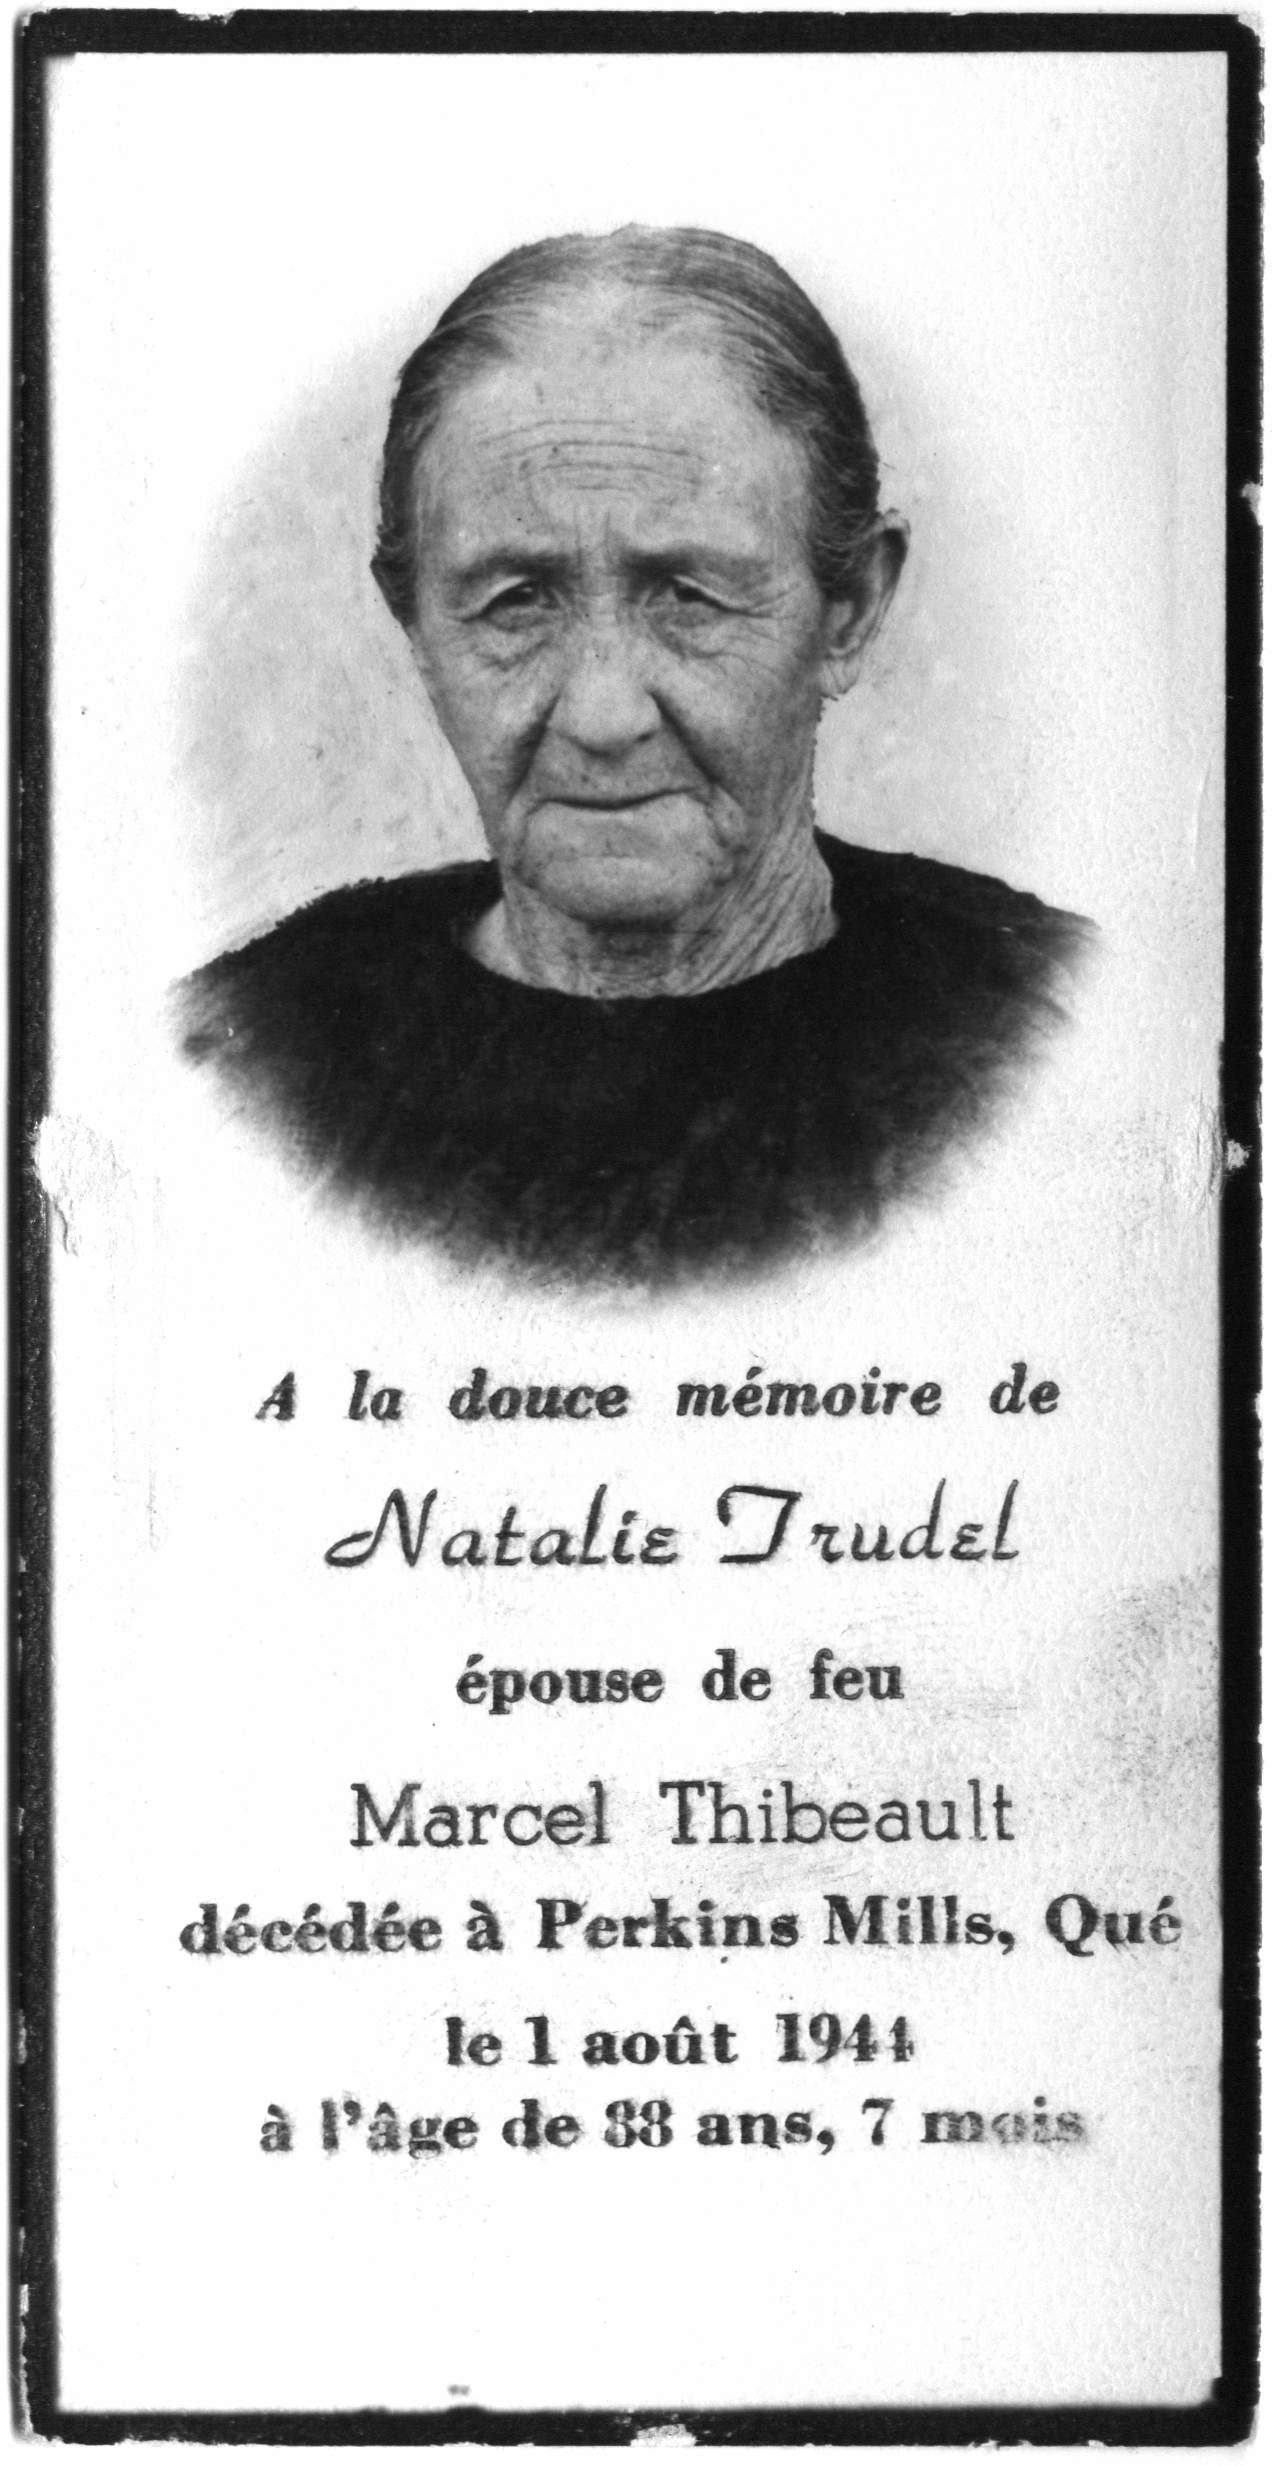 Obituary: Natalie Trudel